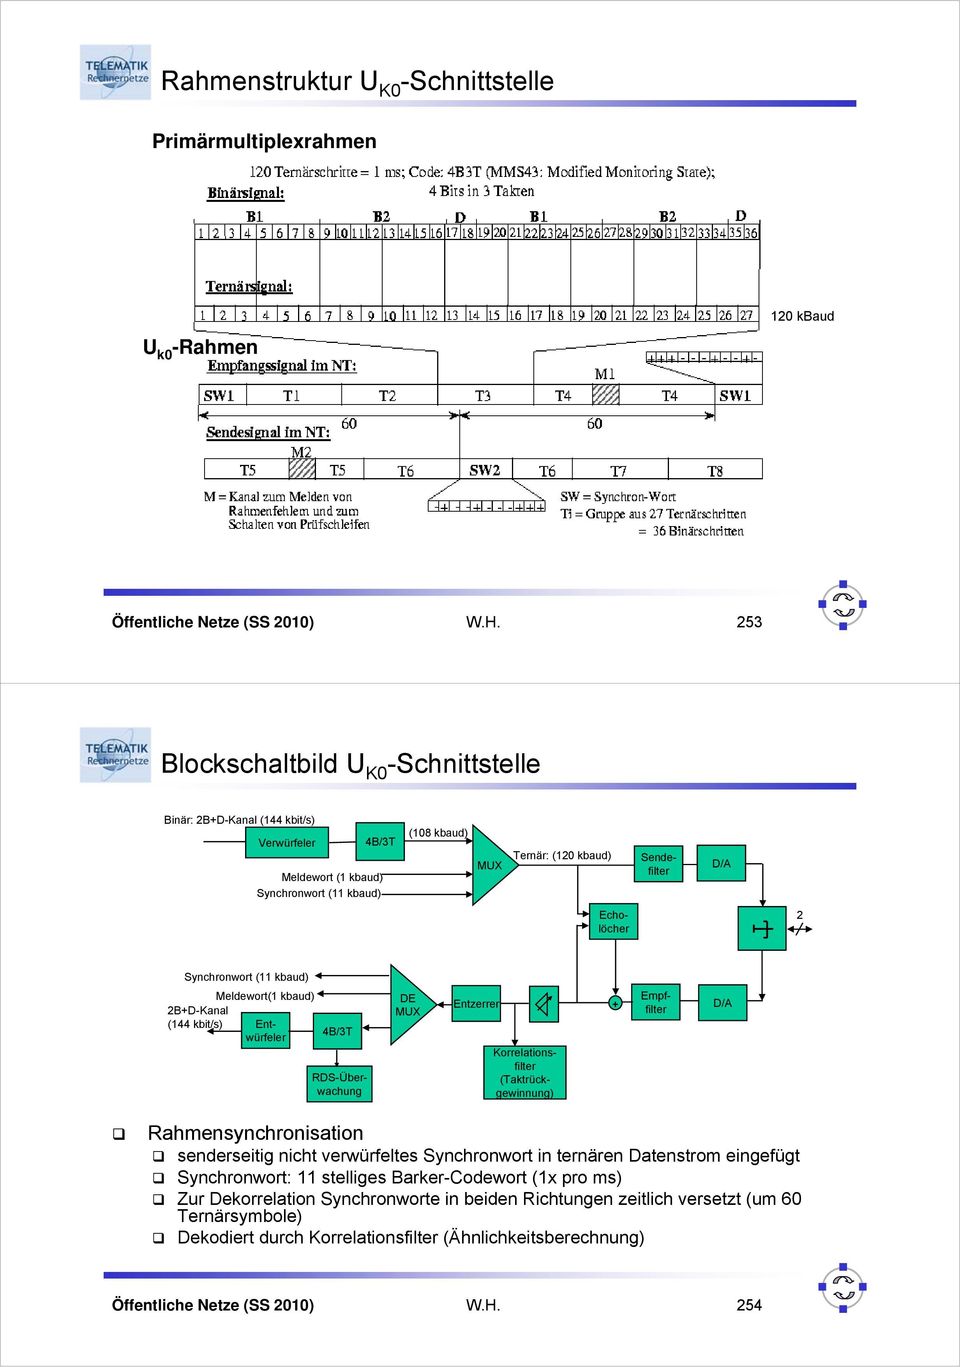 Synchronwort (11 kbaud) 4B/3T DE MUX Entzerrer Empffilter RDS-Überwachung Meldewort(1 kbaud) B+D-Kanal (144 kbit/s) Entwürfeler Korrelationsfilter (Taktrückgewinnung) + D/A Rahmensynchronisation